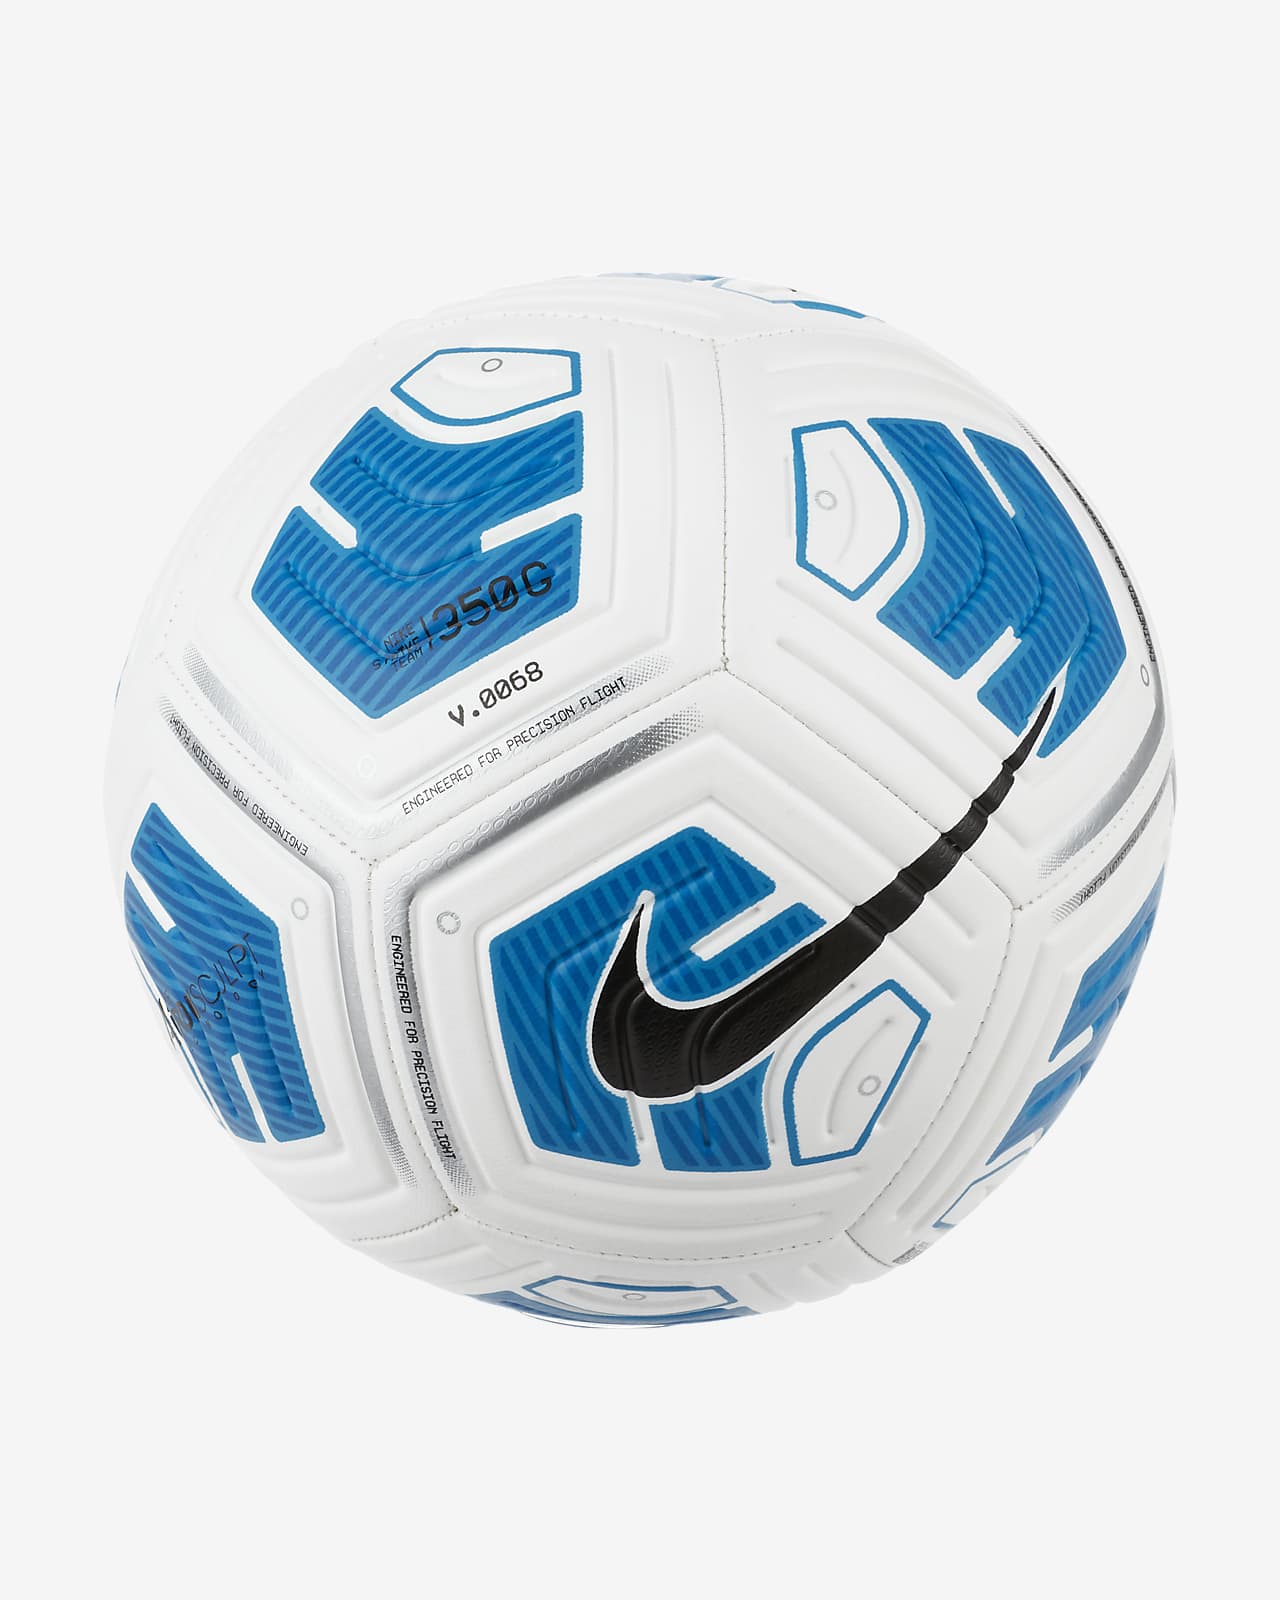 Nike Strike Team futball-labda (350 gramm)